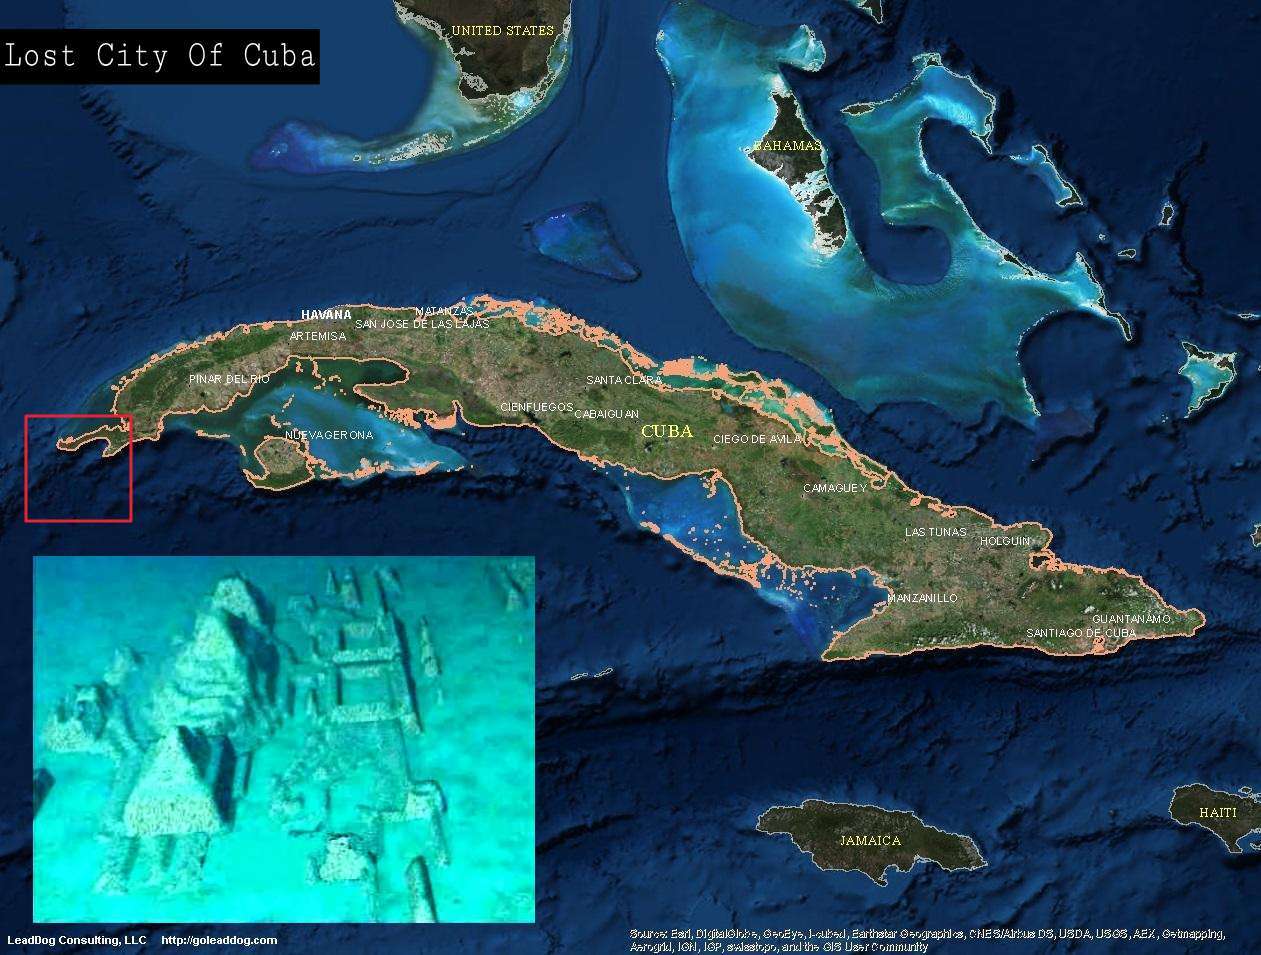 The Underwater City Of Cuba